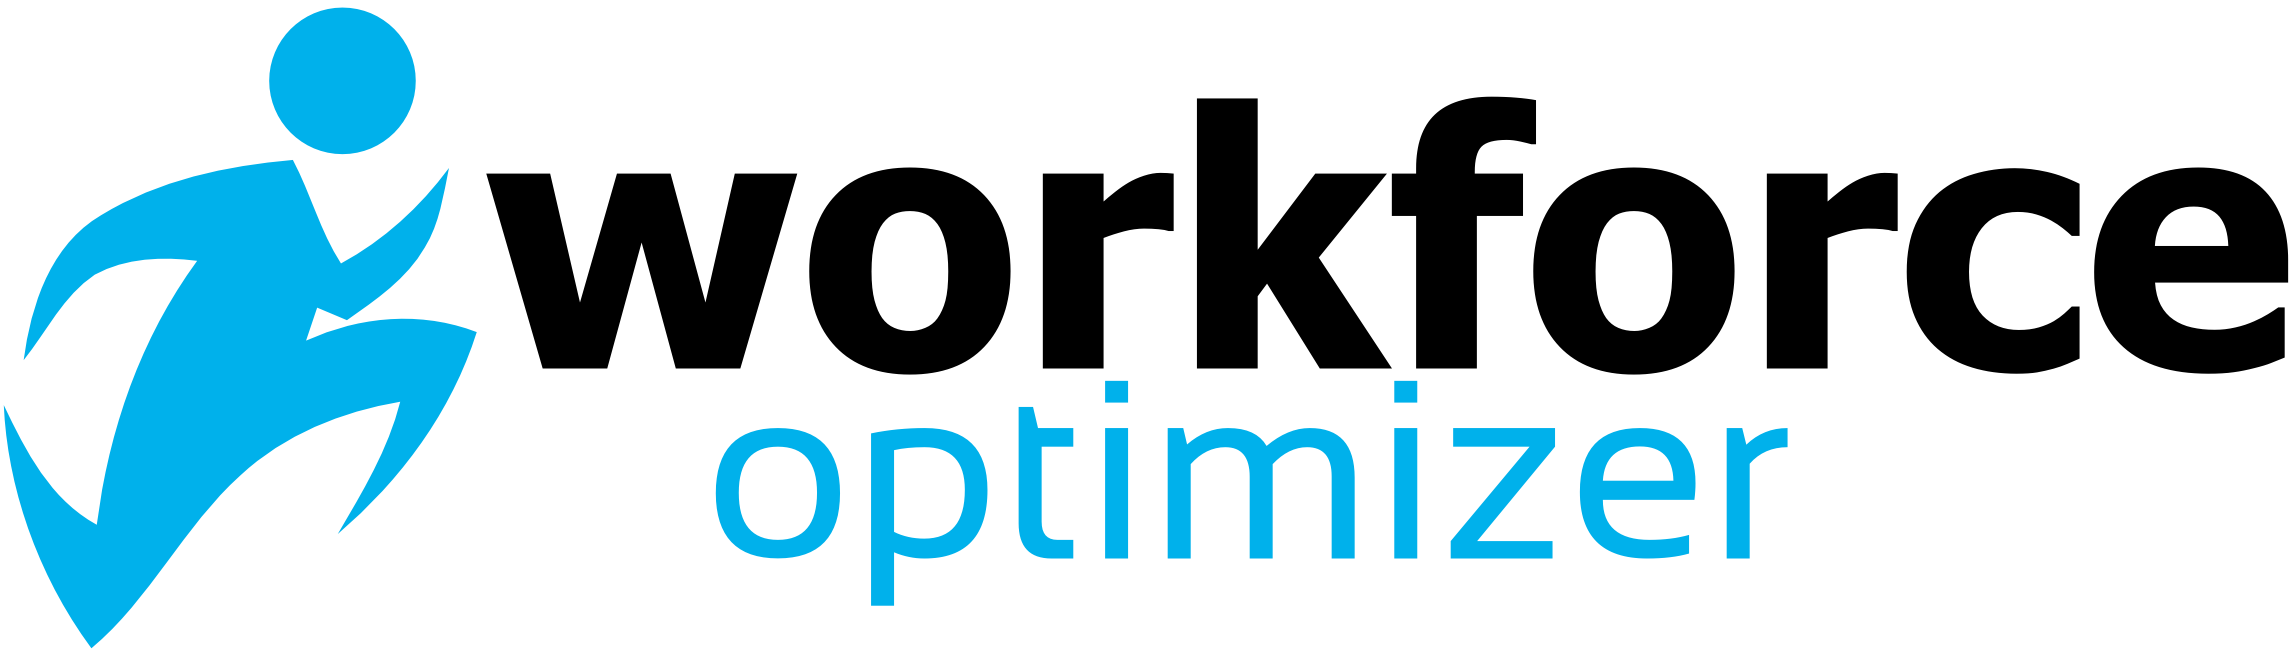 Workforce Optimizer Pte. Ltd. logo